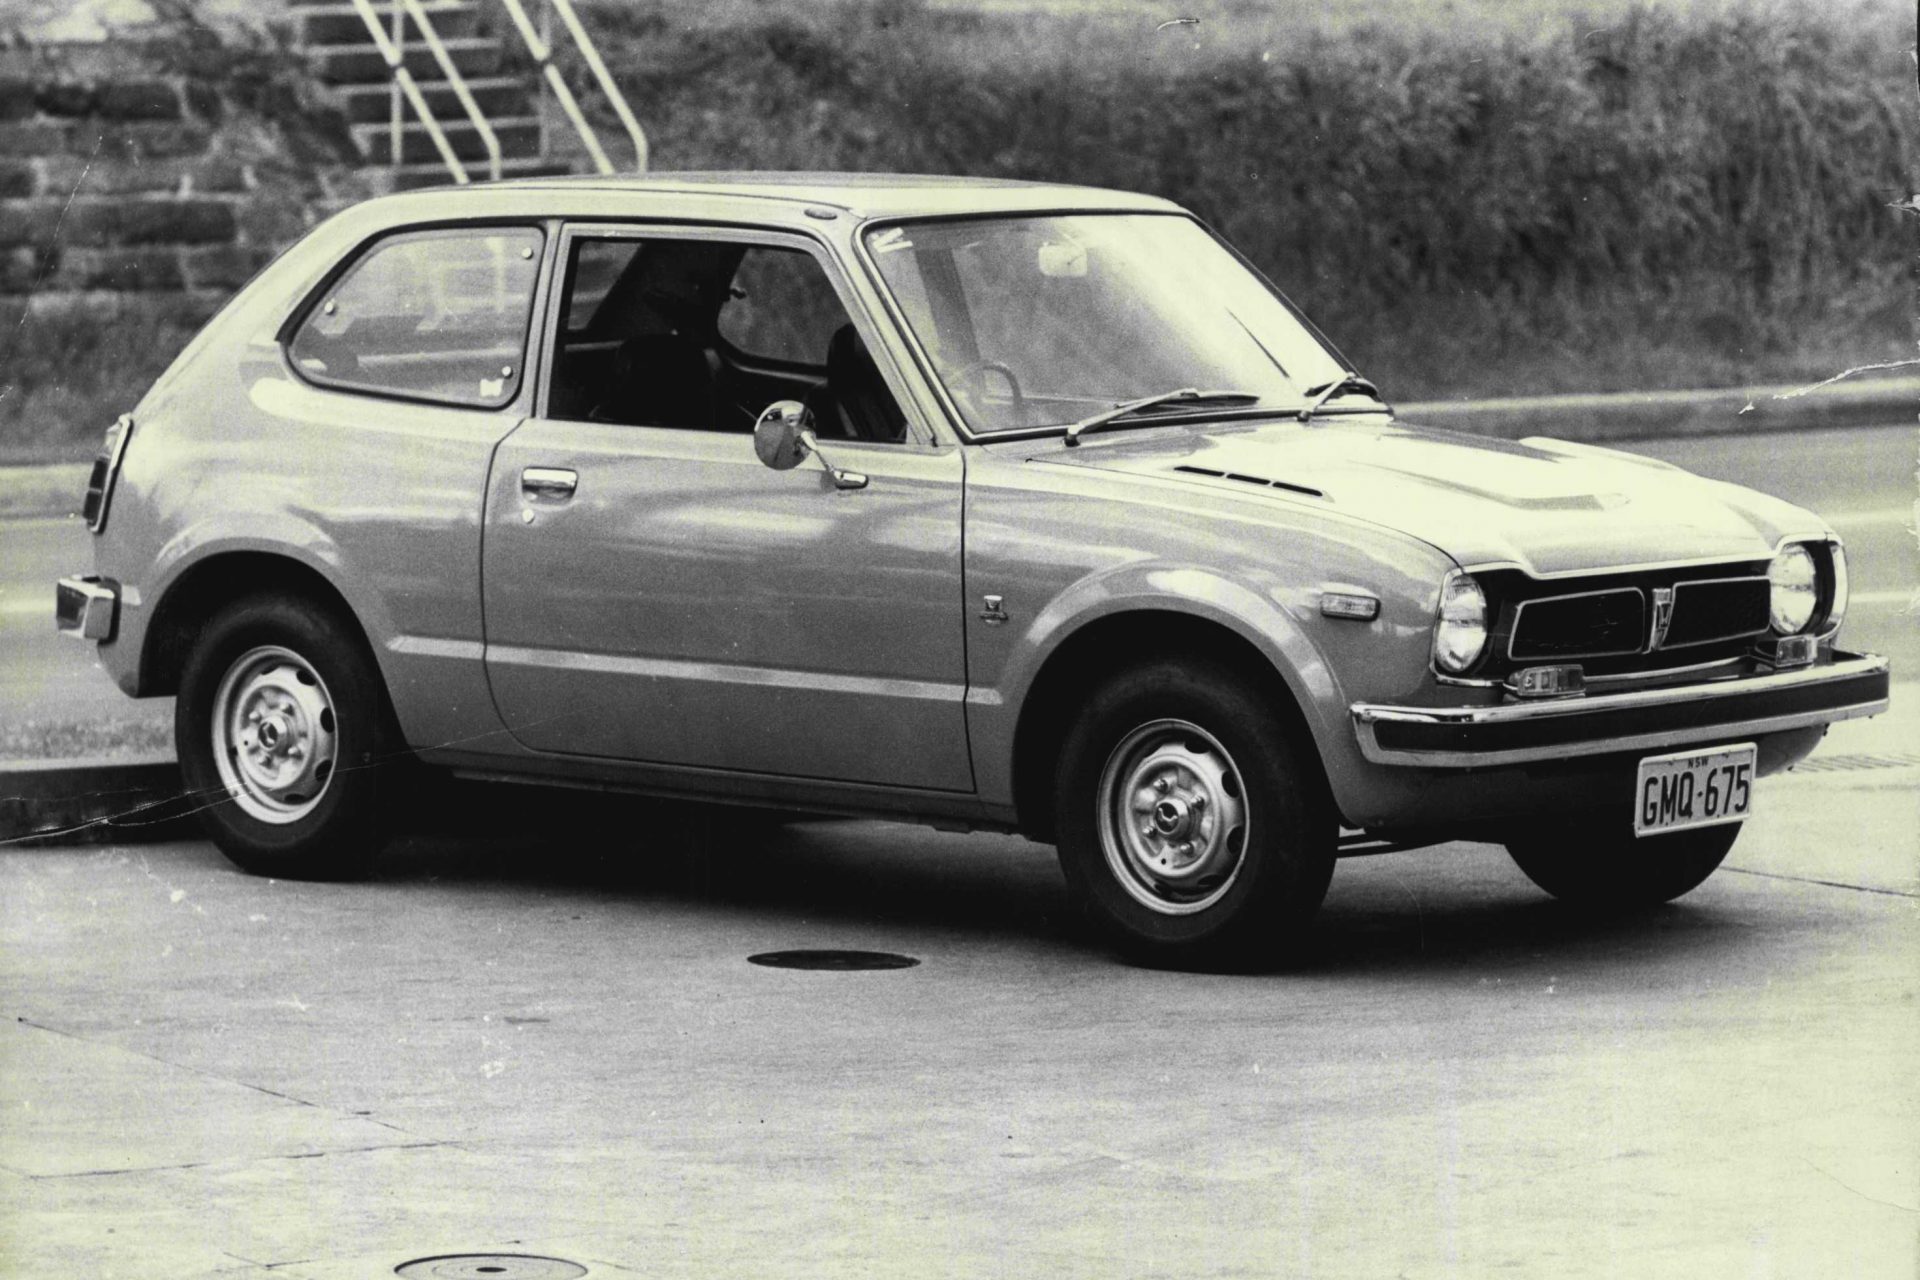 #6: Honda Civic (1972), 18.5 miljoen auto's